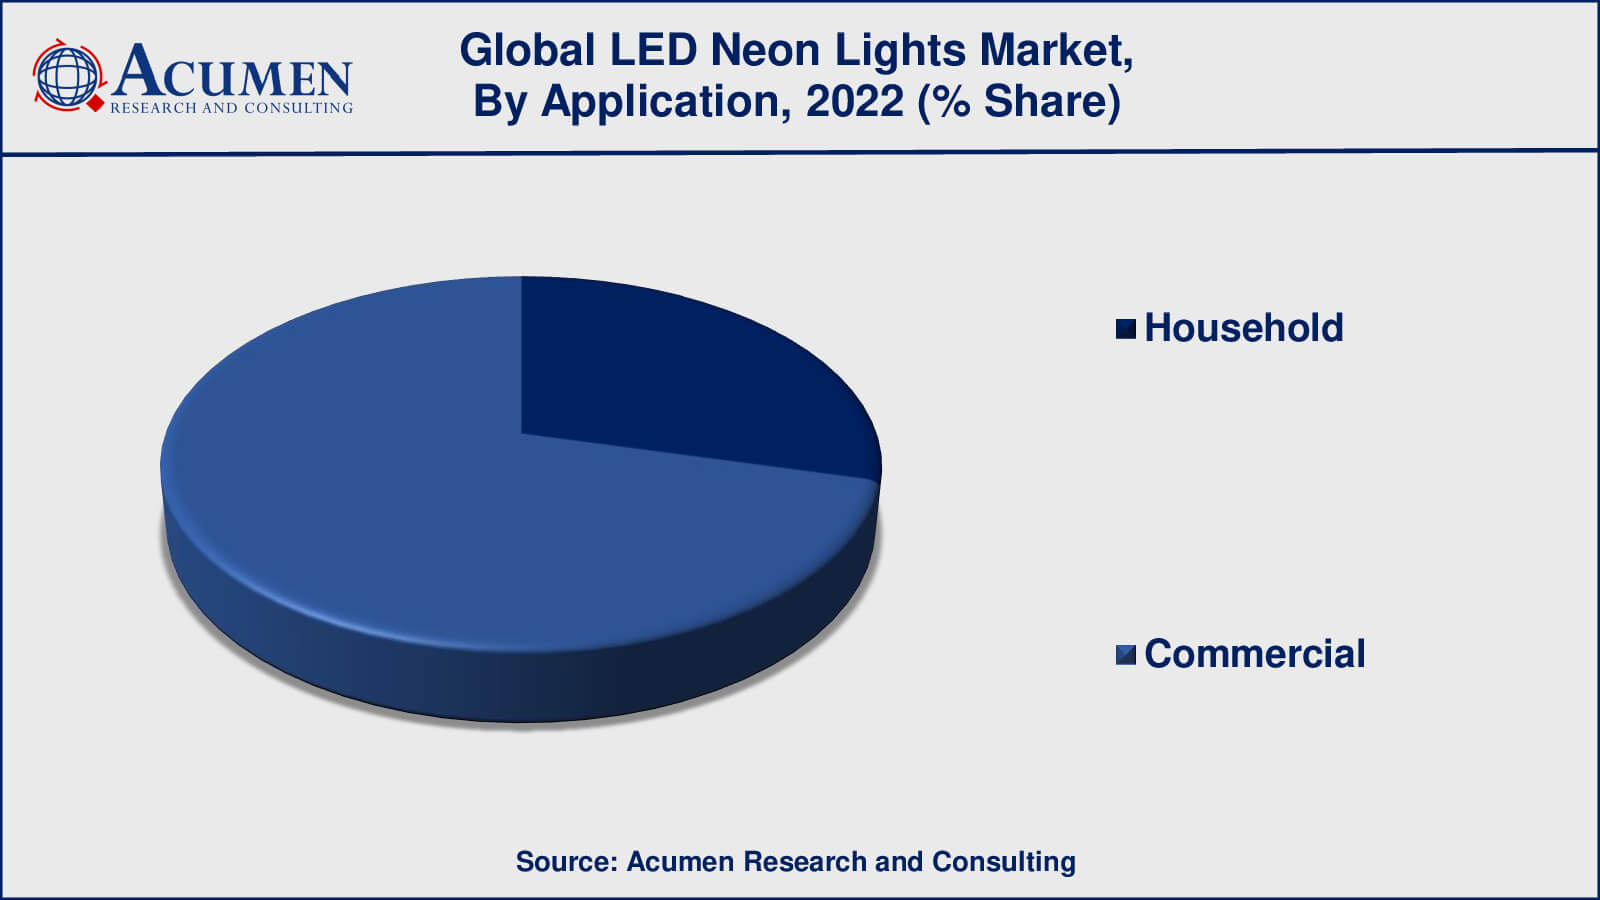 LED Neon Lights Market Drivers